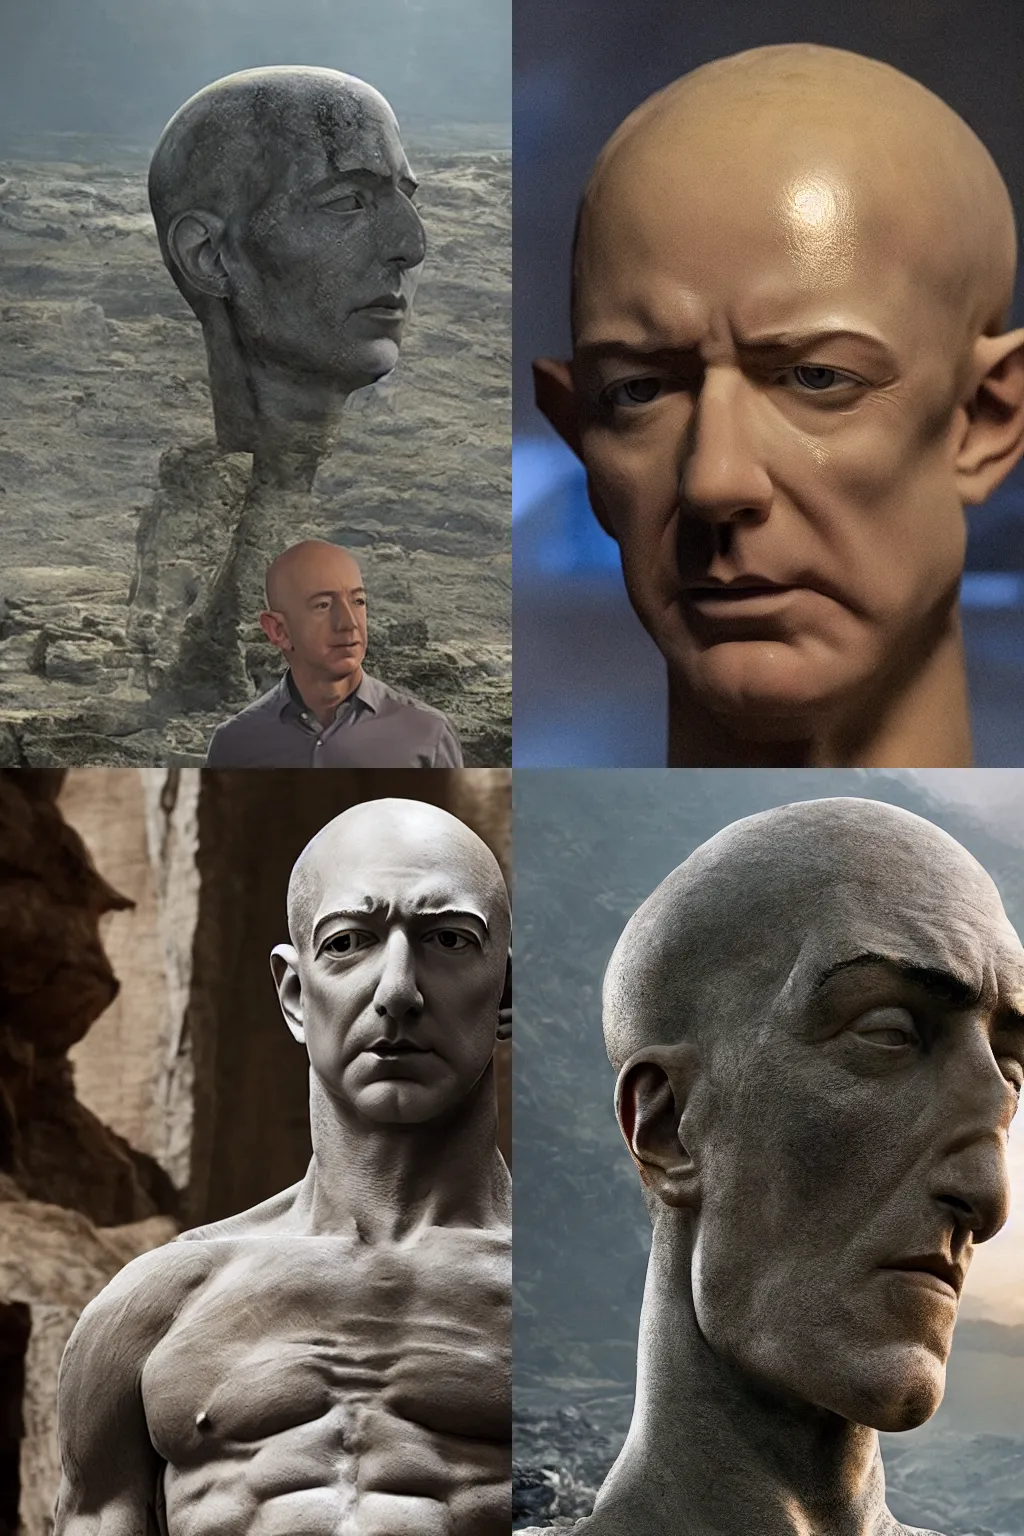 Prompt: still from movie Prometheus of giant Jeff Bezos stone head